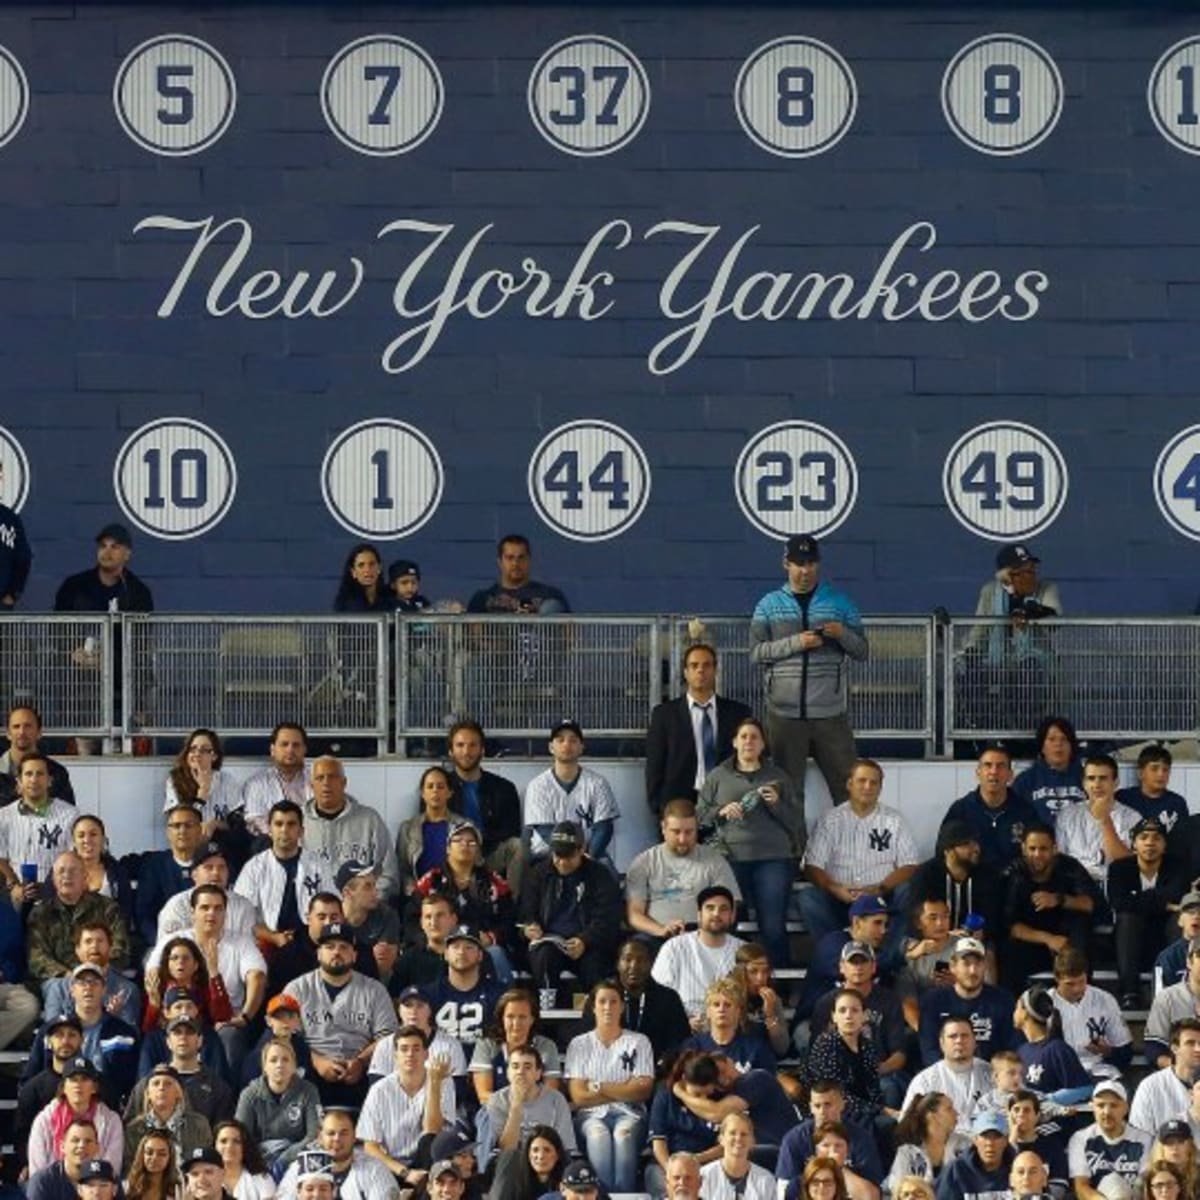 New York Yankees retired numbers